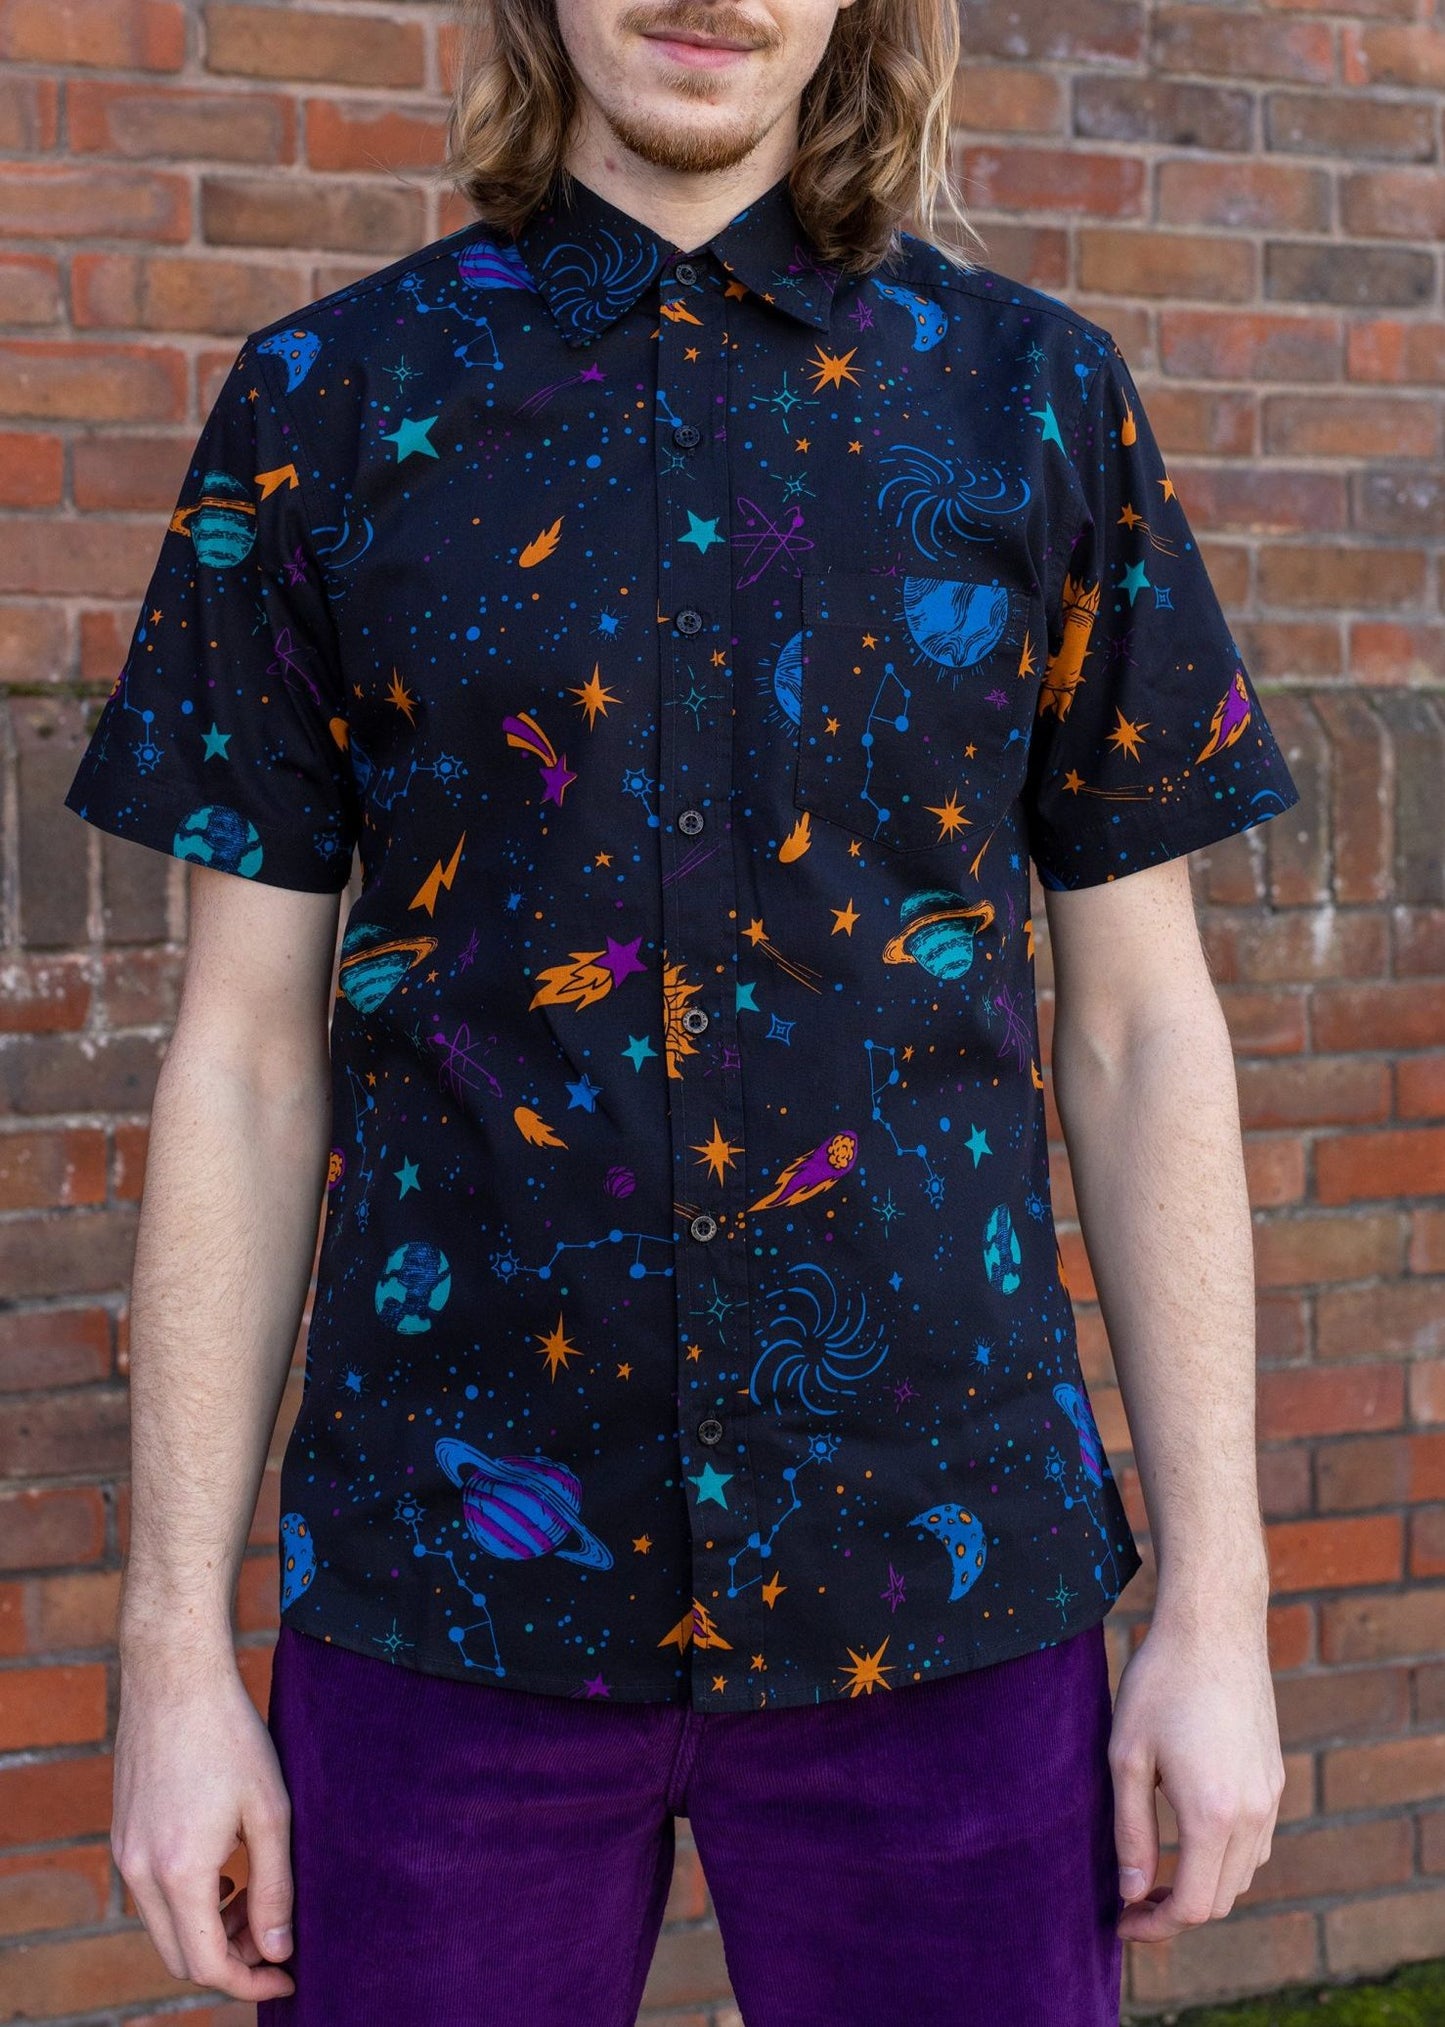 Run & Fly - Cosmic Space Shirt